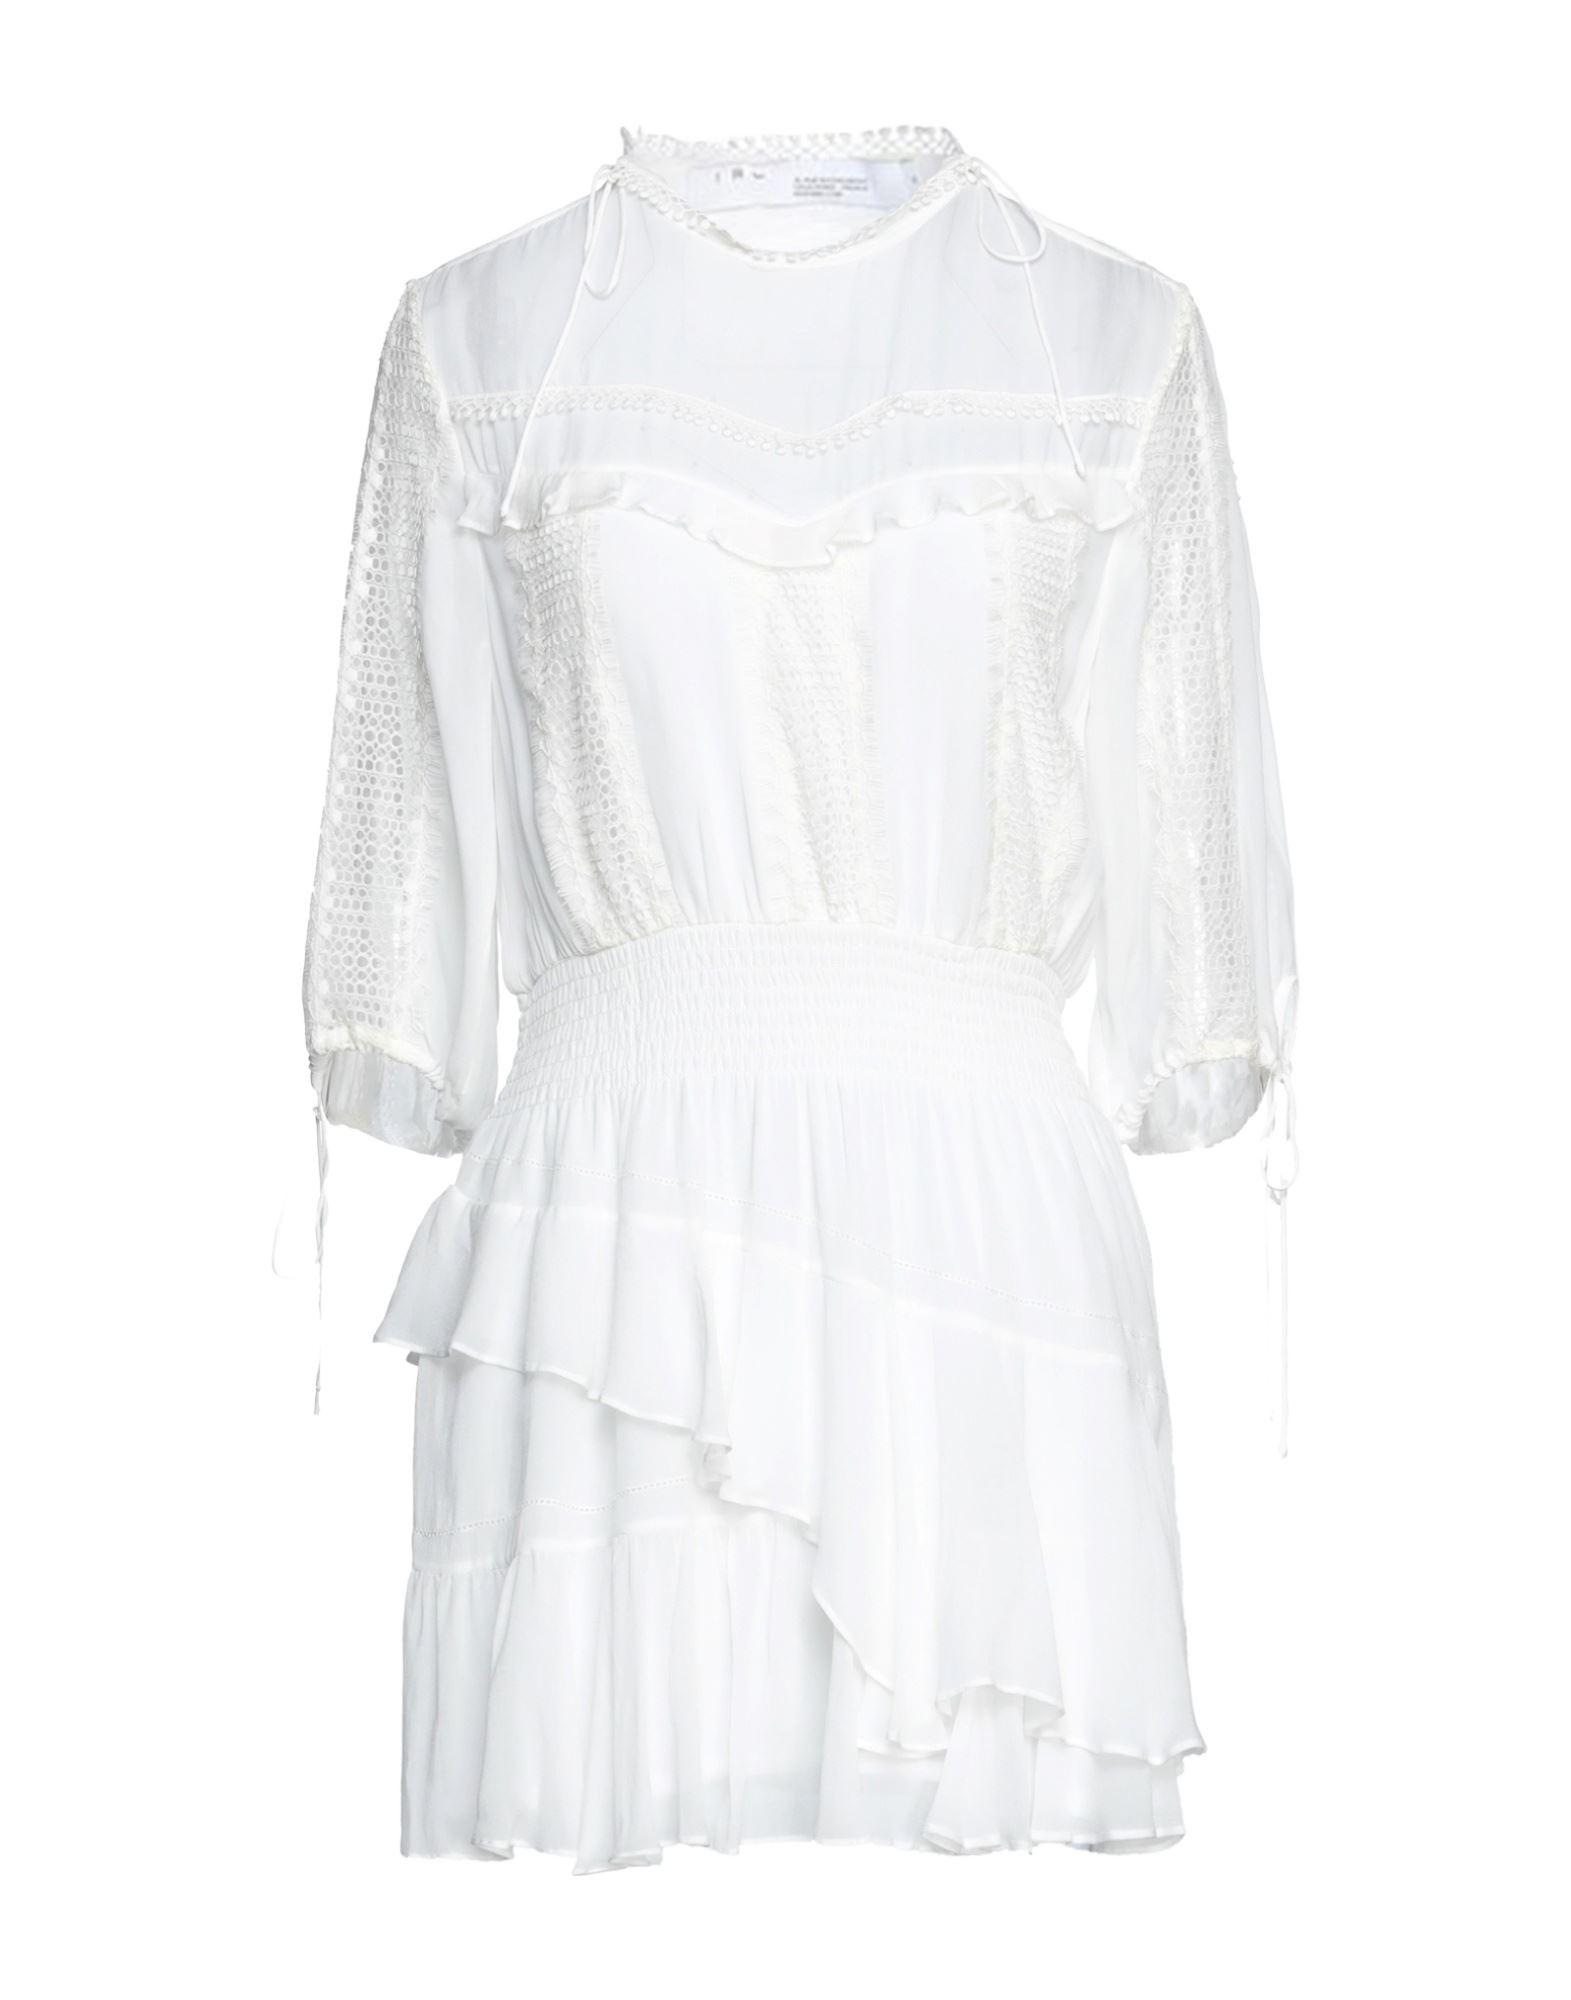 IRO Lace Short Dress in White - Lyst